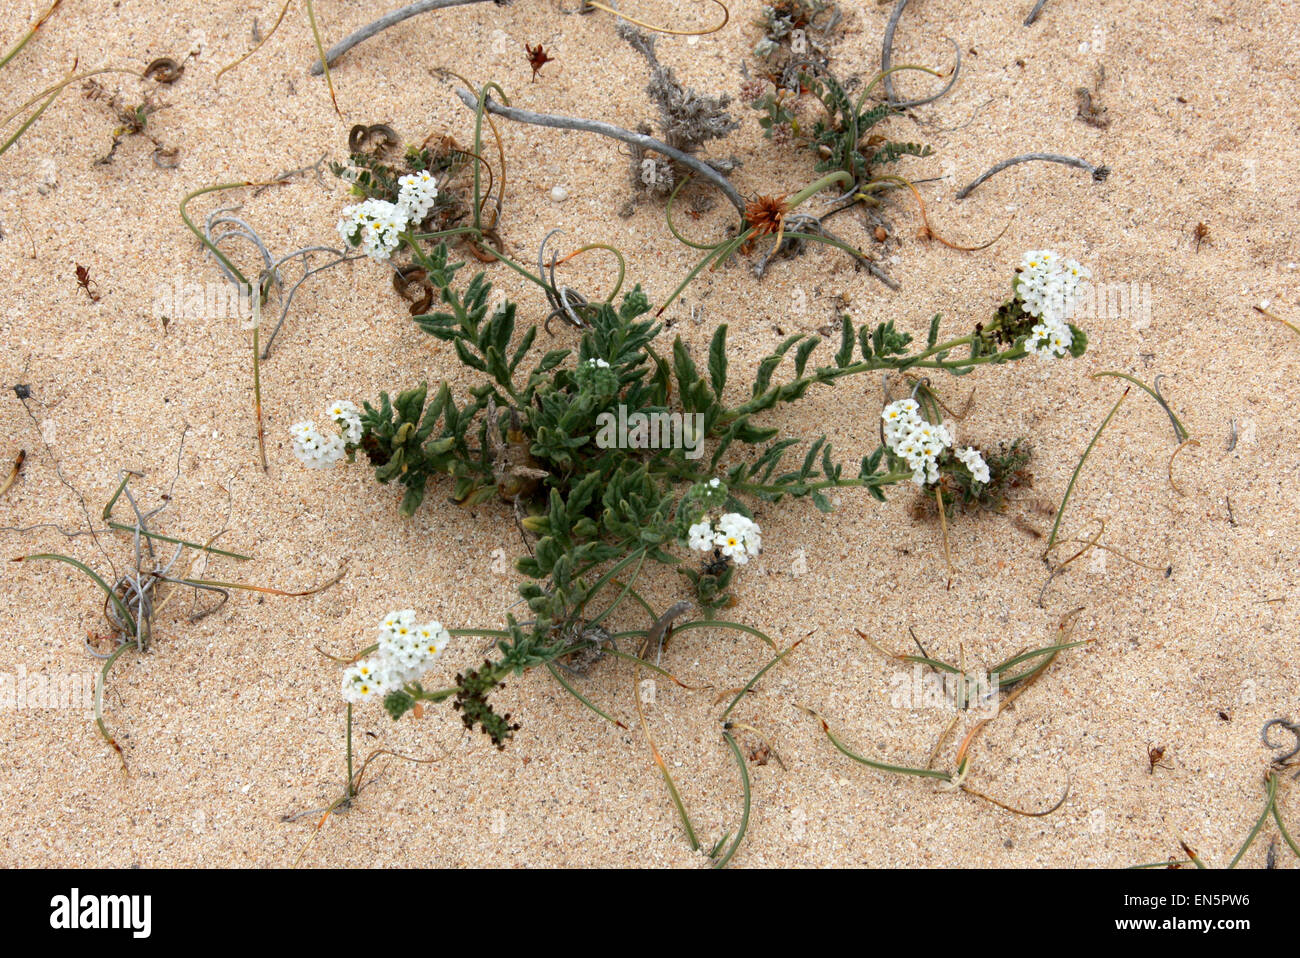 Wavy Heliotrope, Heliotropium ramosissimum, Boraginaceae. National Park, Corallejo, Fuerteventura, Canary Islands, Spain. Stock Photo